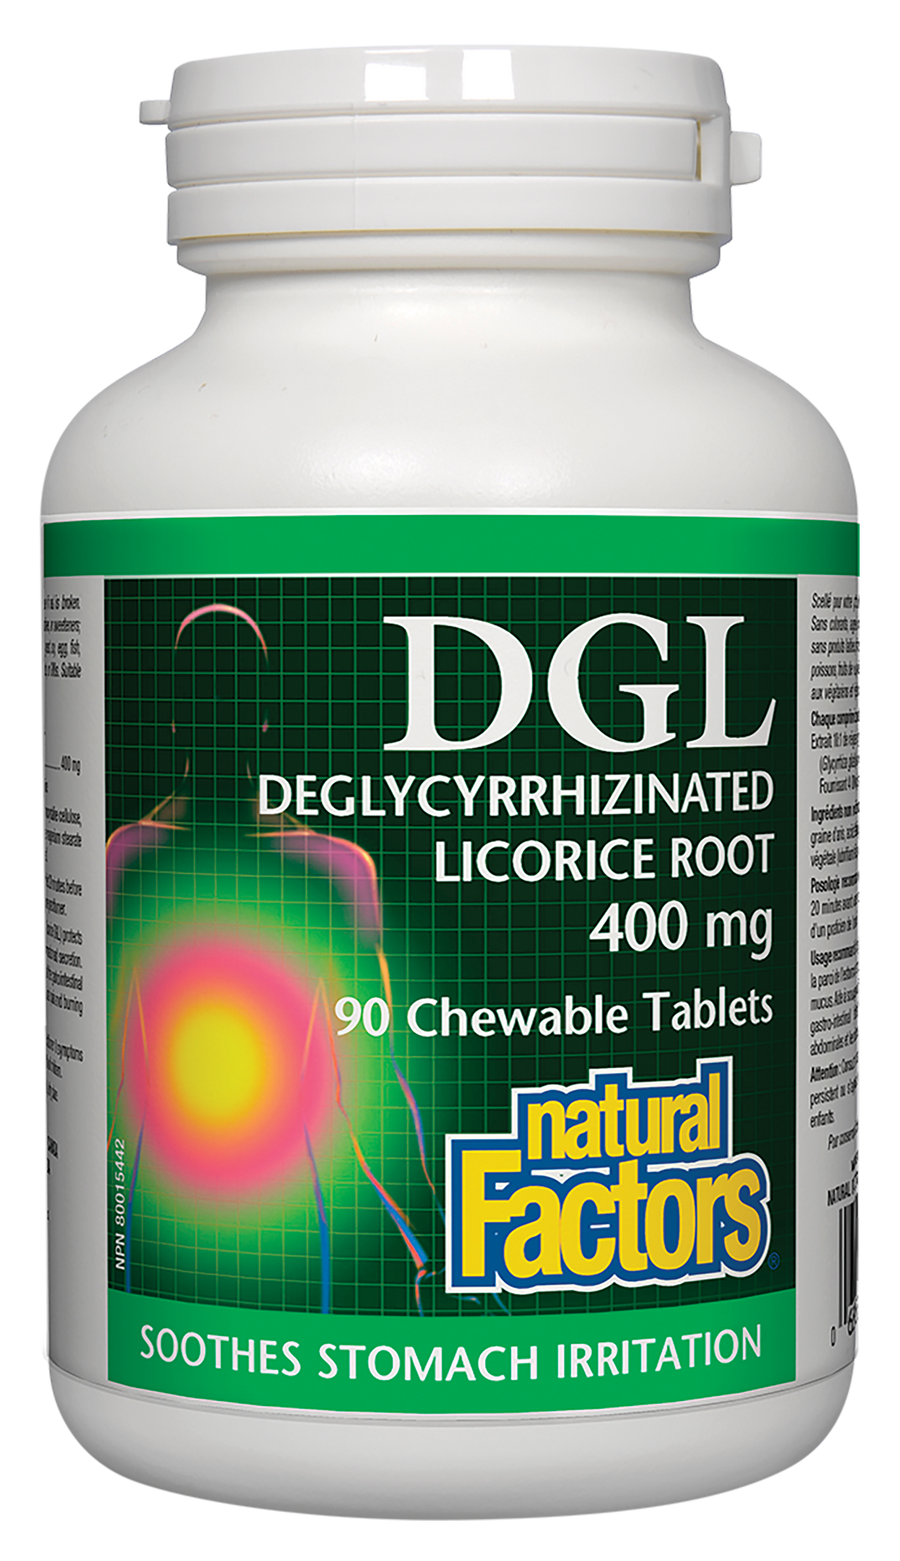 Natural Factors DGL Deglycyrrhizinated Licorice Root 90 Chewable Tablets